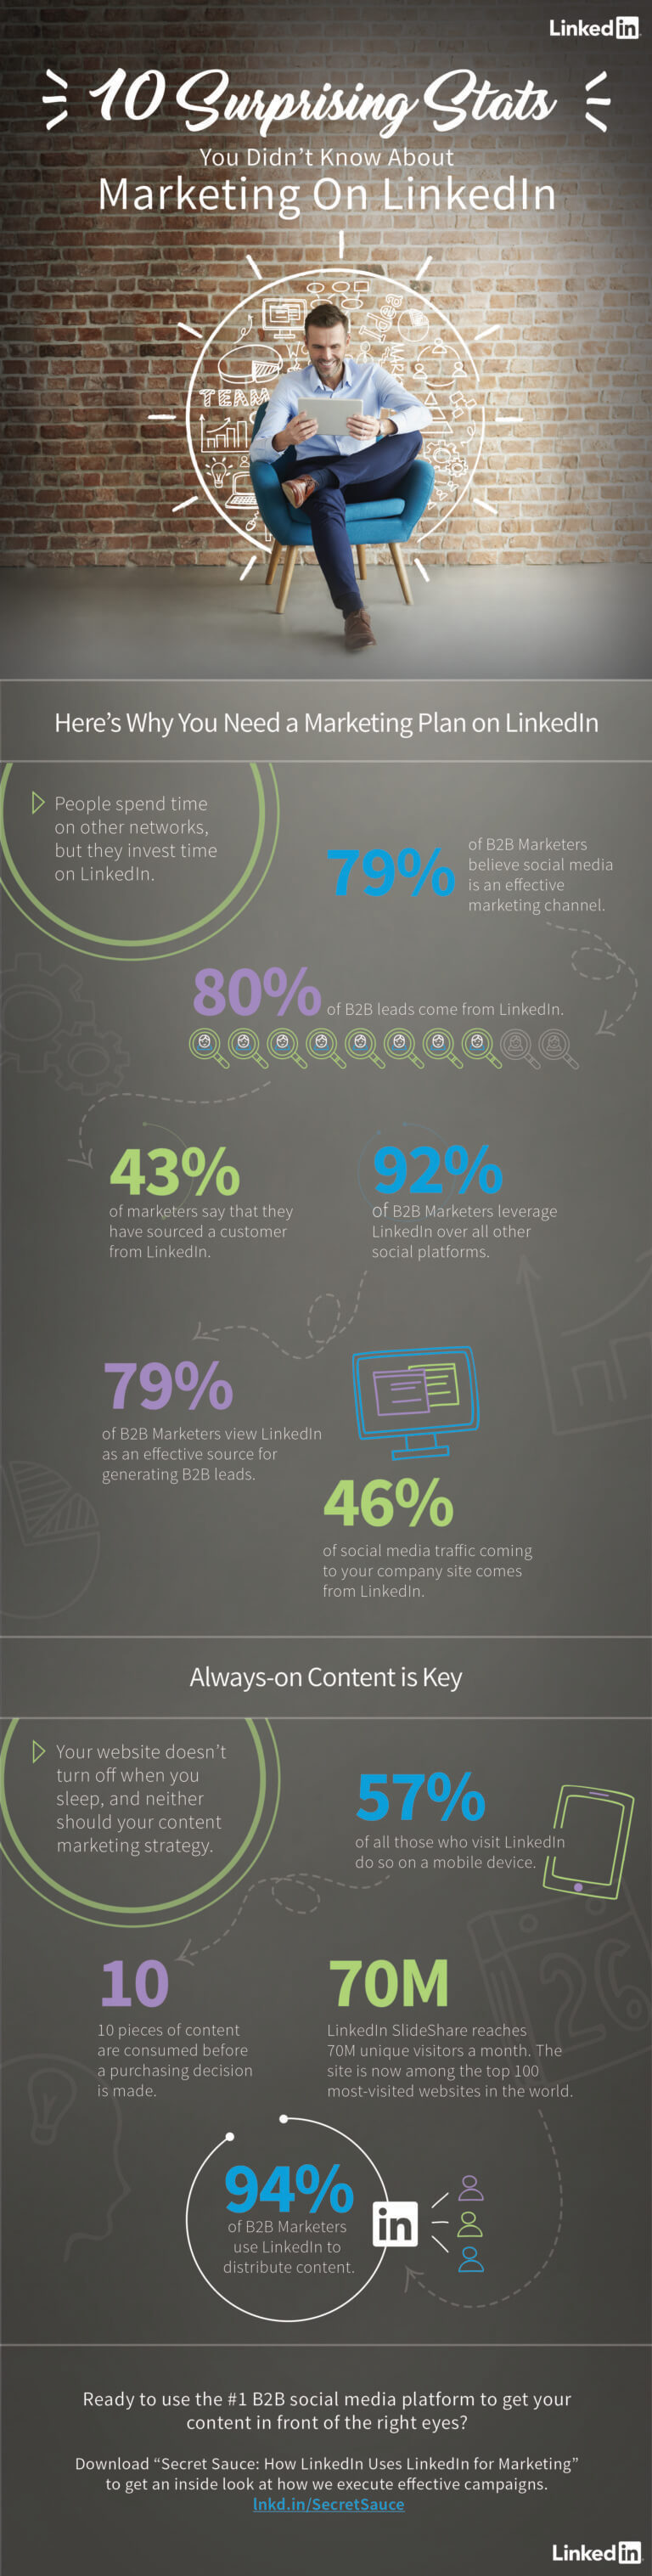 LinkedIn Statistics for Marketing